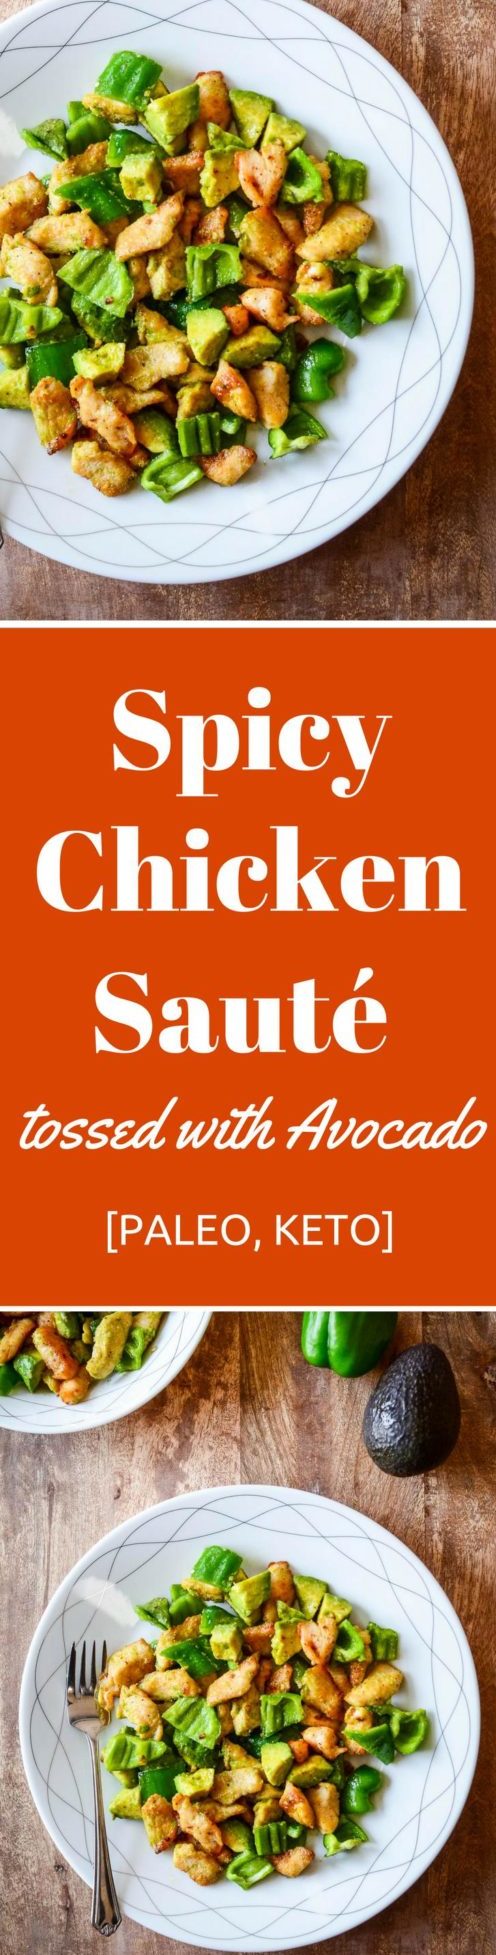 Spicy Chicken Sauté tossed with Avocado Recipe [Paleo, Keto] #paleo #keto #recipes - https://paleoflourish.com/spicy-chicken-saute-with-avocado-recipe-paleo-keto